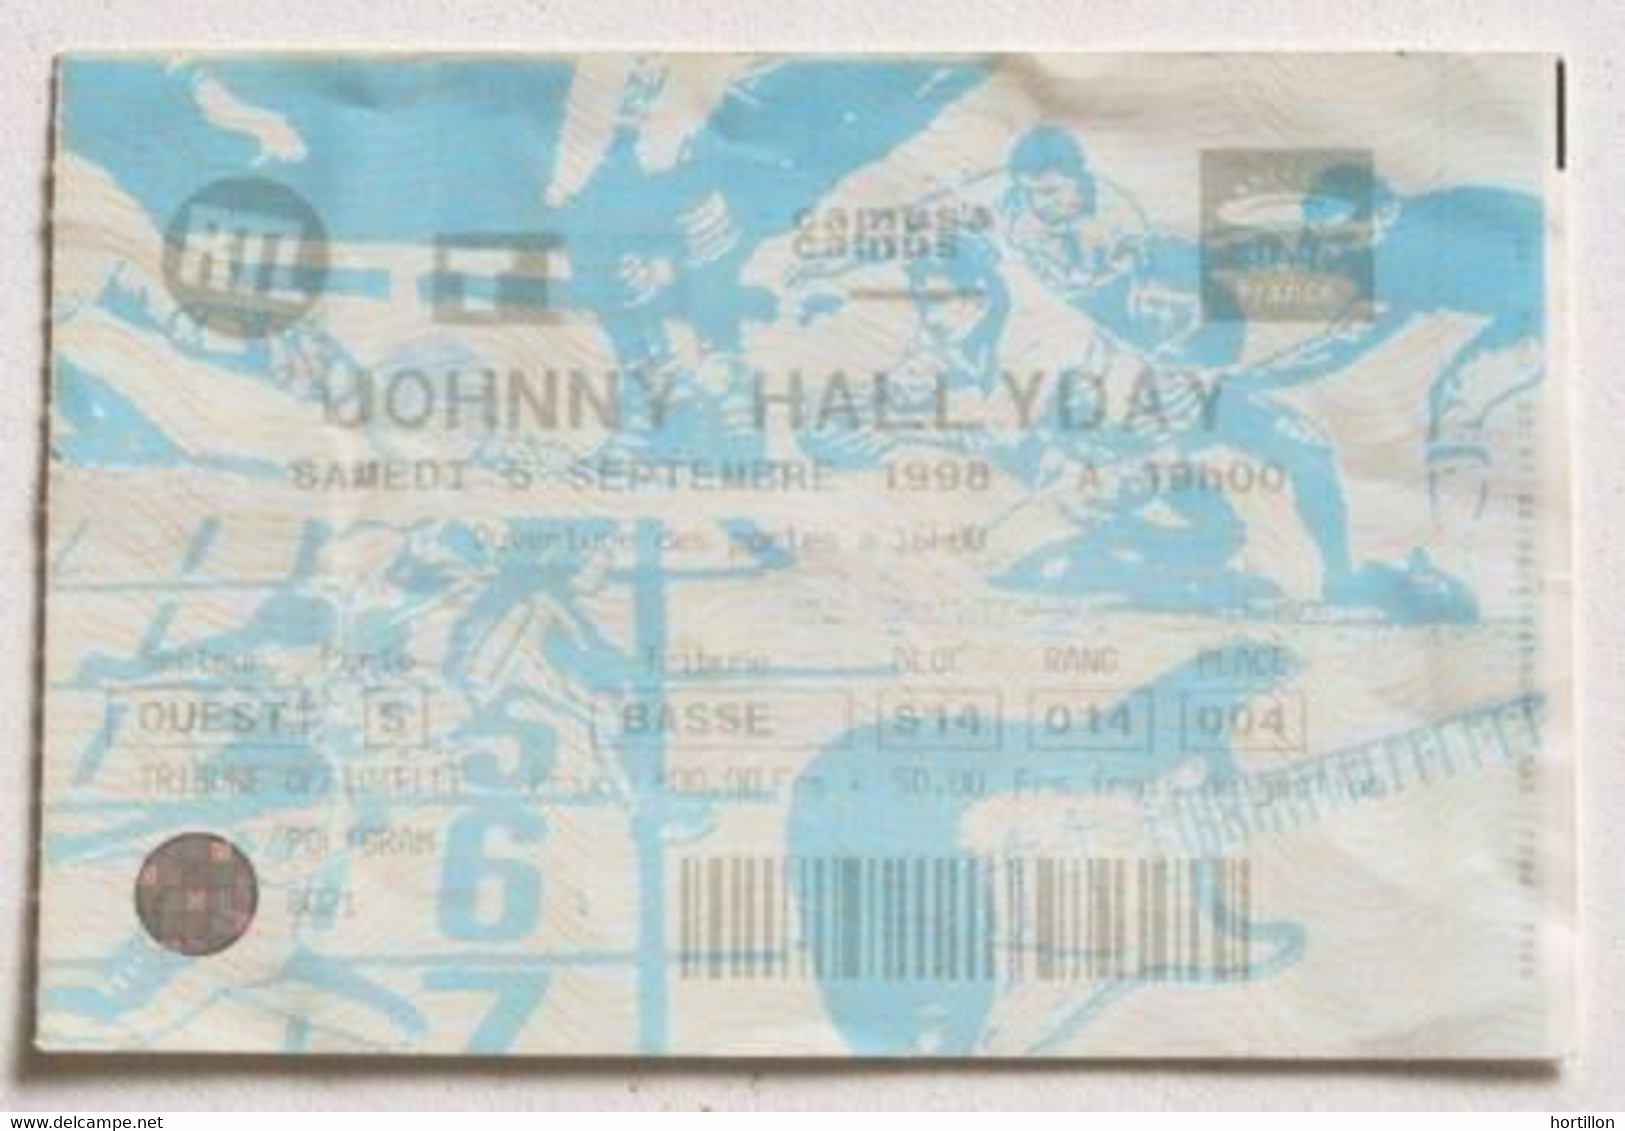 JOHNNY HALLYDAY Billet Ticket Concert FRANCE Paris Stade De France 05/09/1998 - Tickets De Concerts